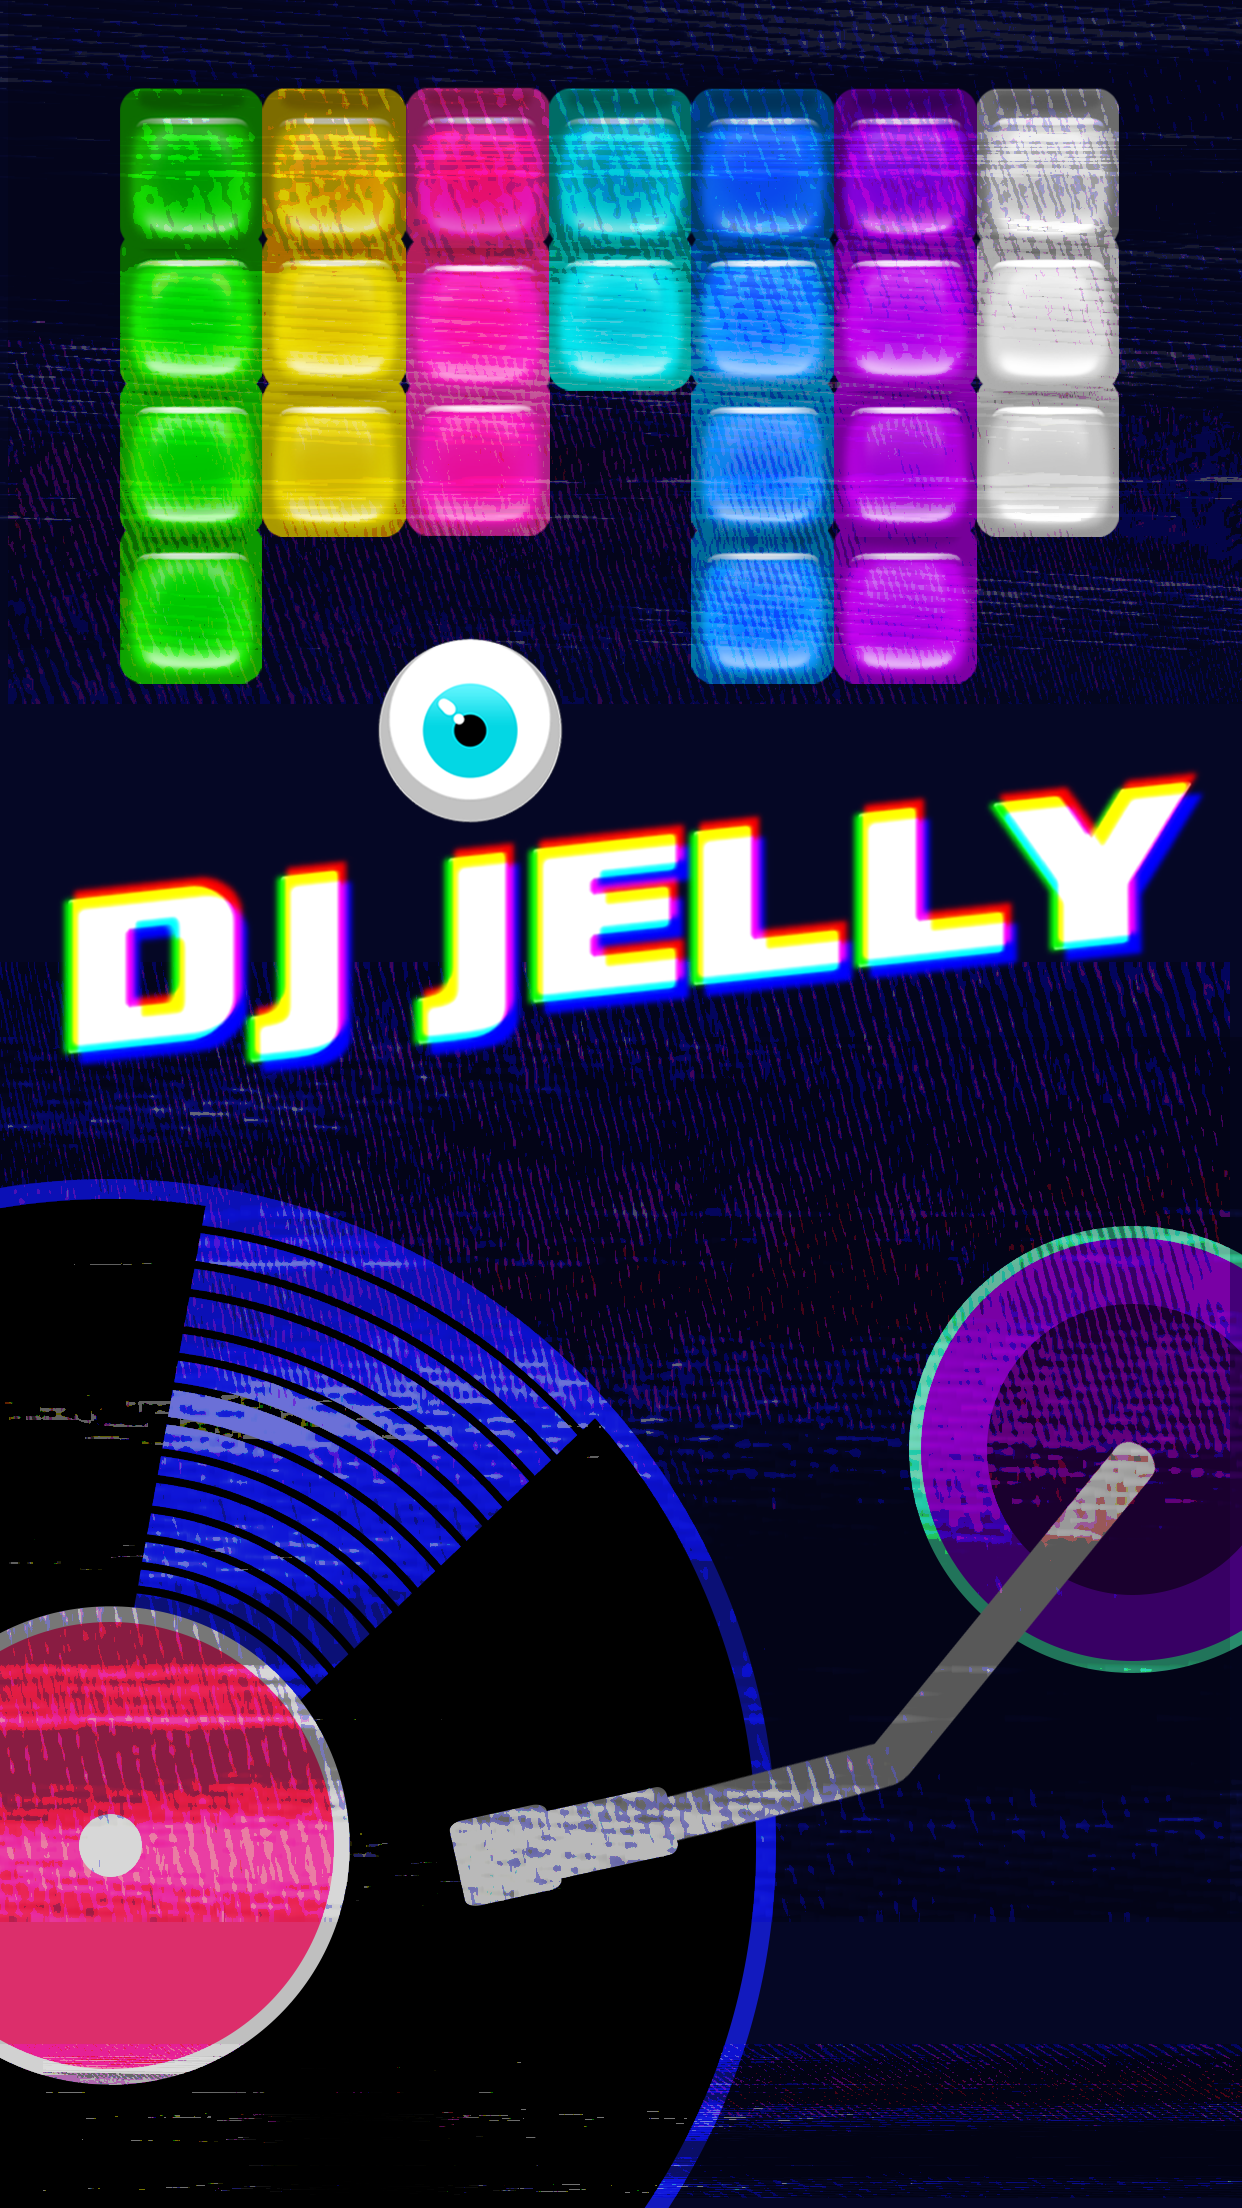 Screenshot 1 of DJ젤리 (DJ jelly) 1.7